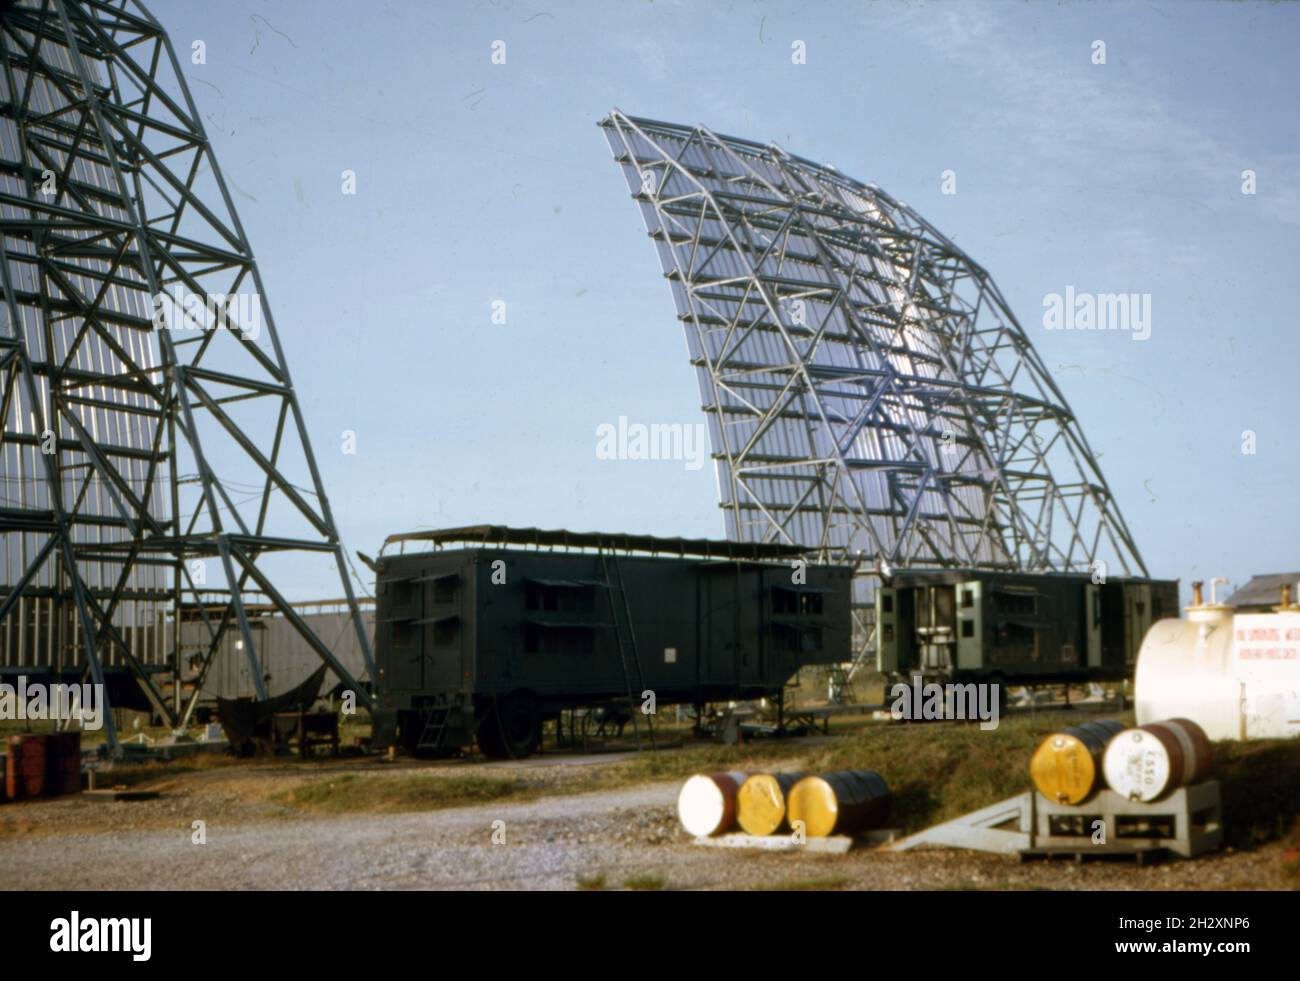 USA Vietnam-Krieg / Vietnam War - Phu Lam - Troposphärenfunk  / Troposcatter AN/MRC-85 Back Porch Tropospheric Scatter System Stock Photo